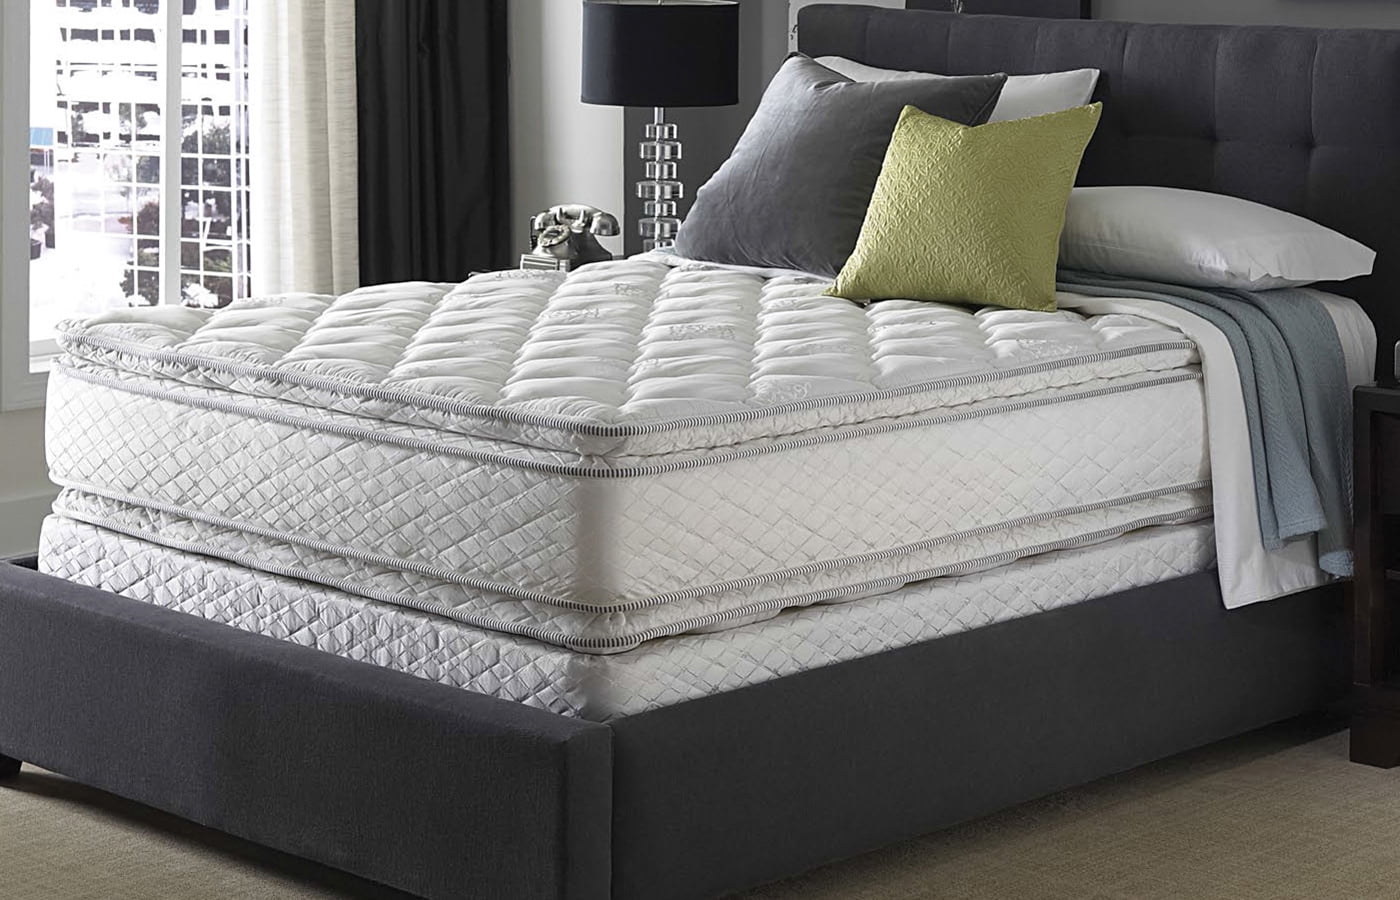 buy memory foam mattress dallas texas 75252